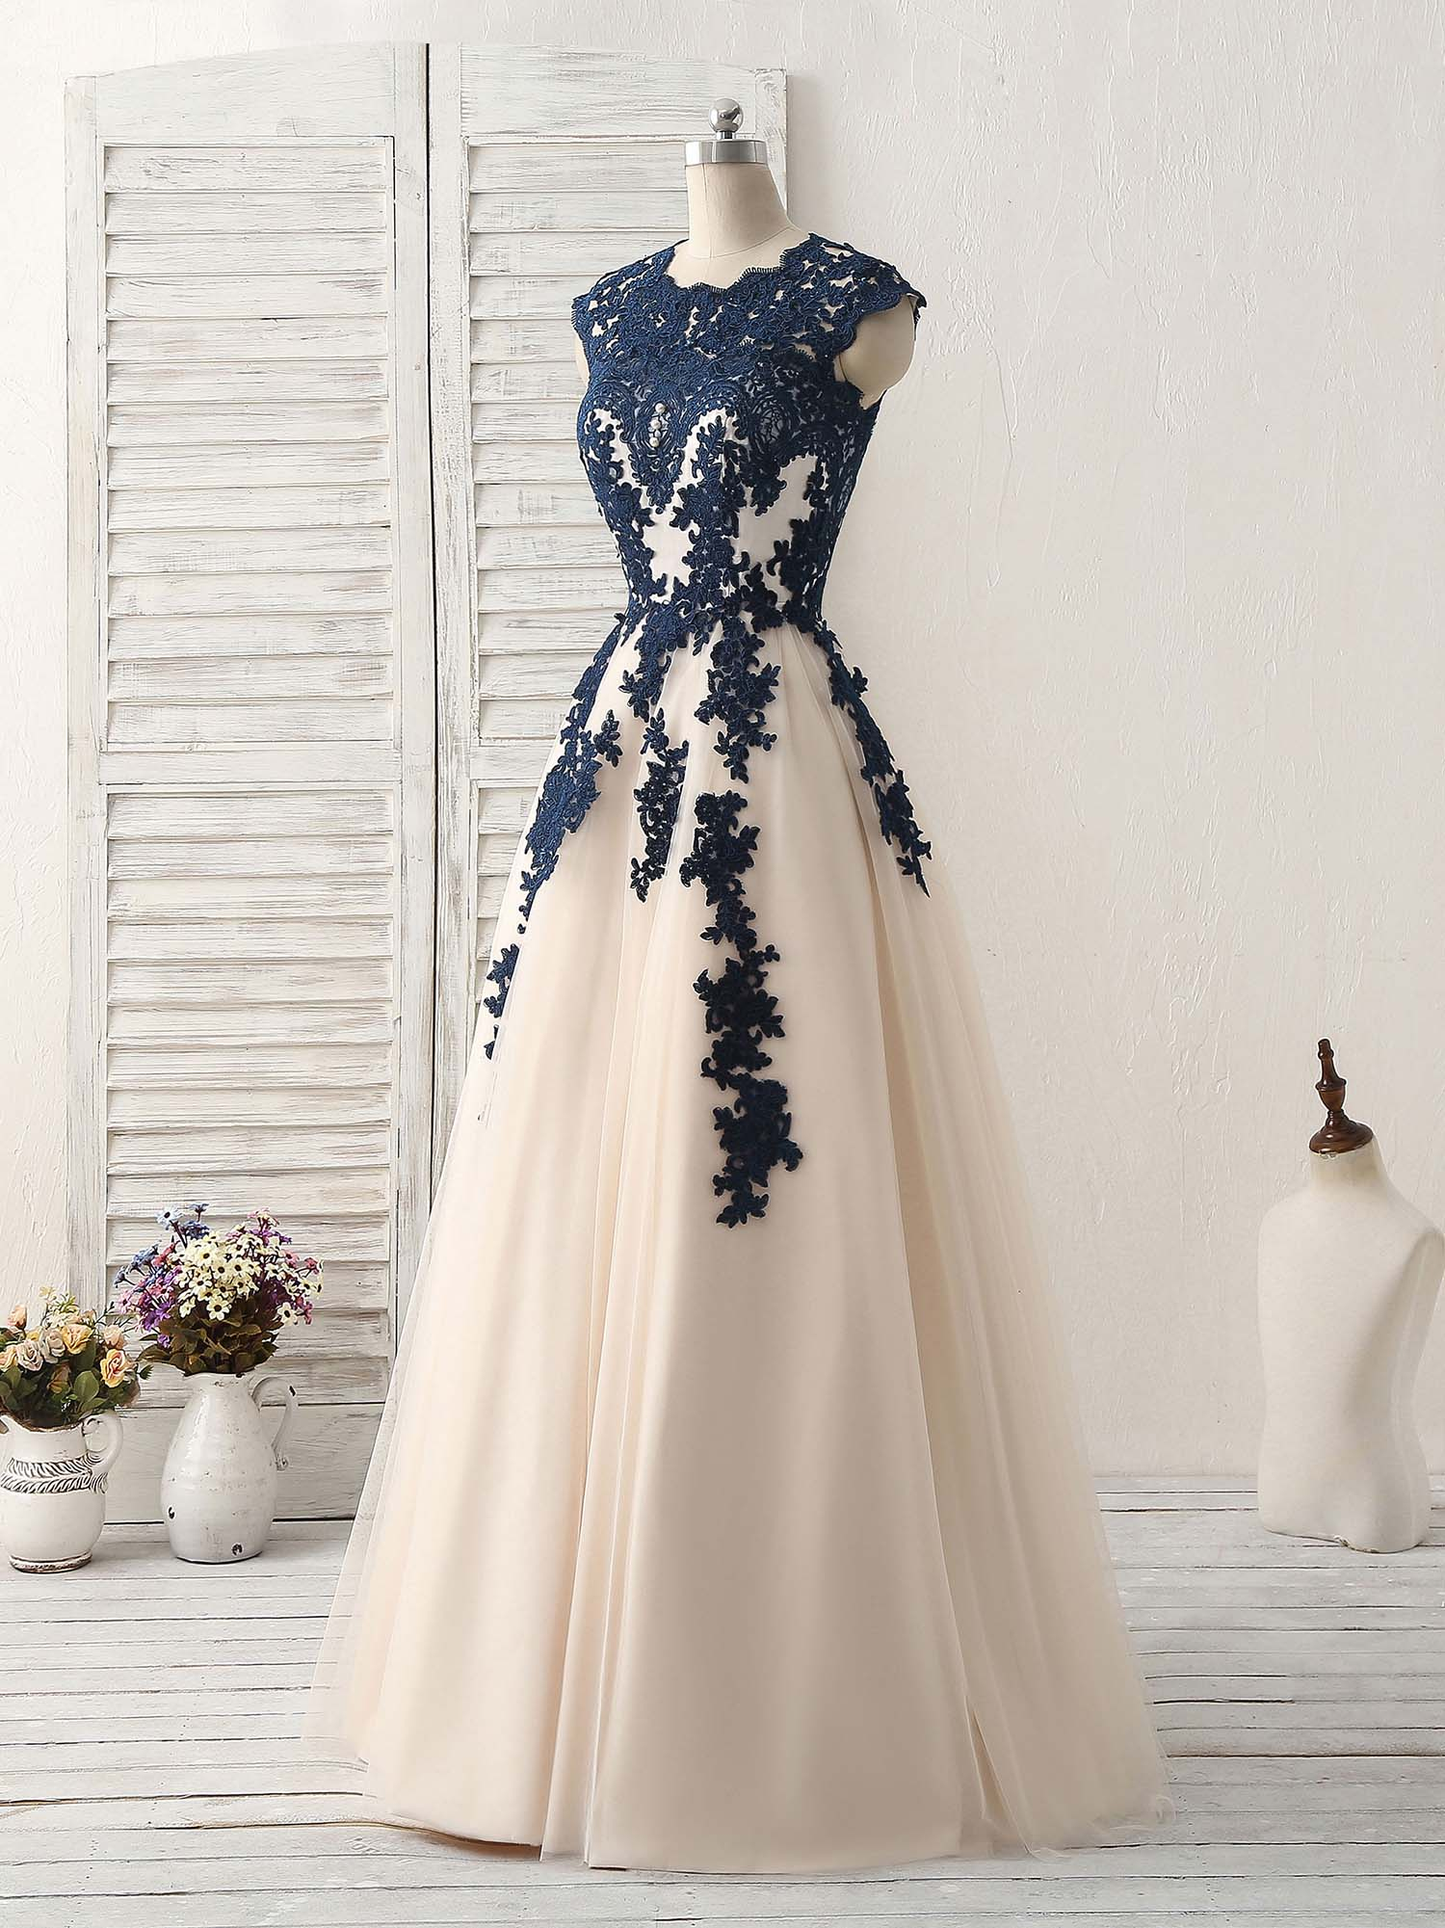 A-Line Tulle Appliques Formal Party Dress Bridesmaid Dress,DP1440